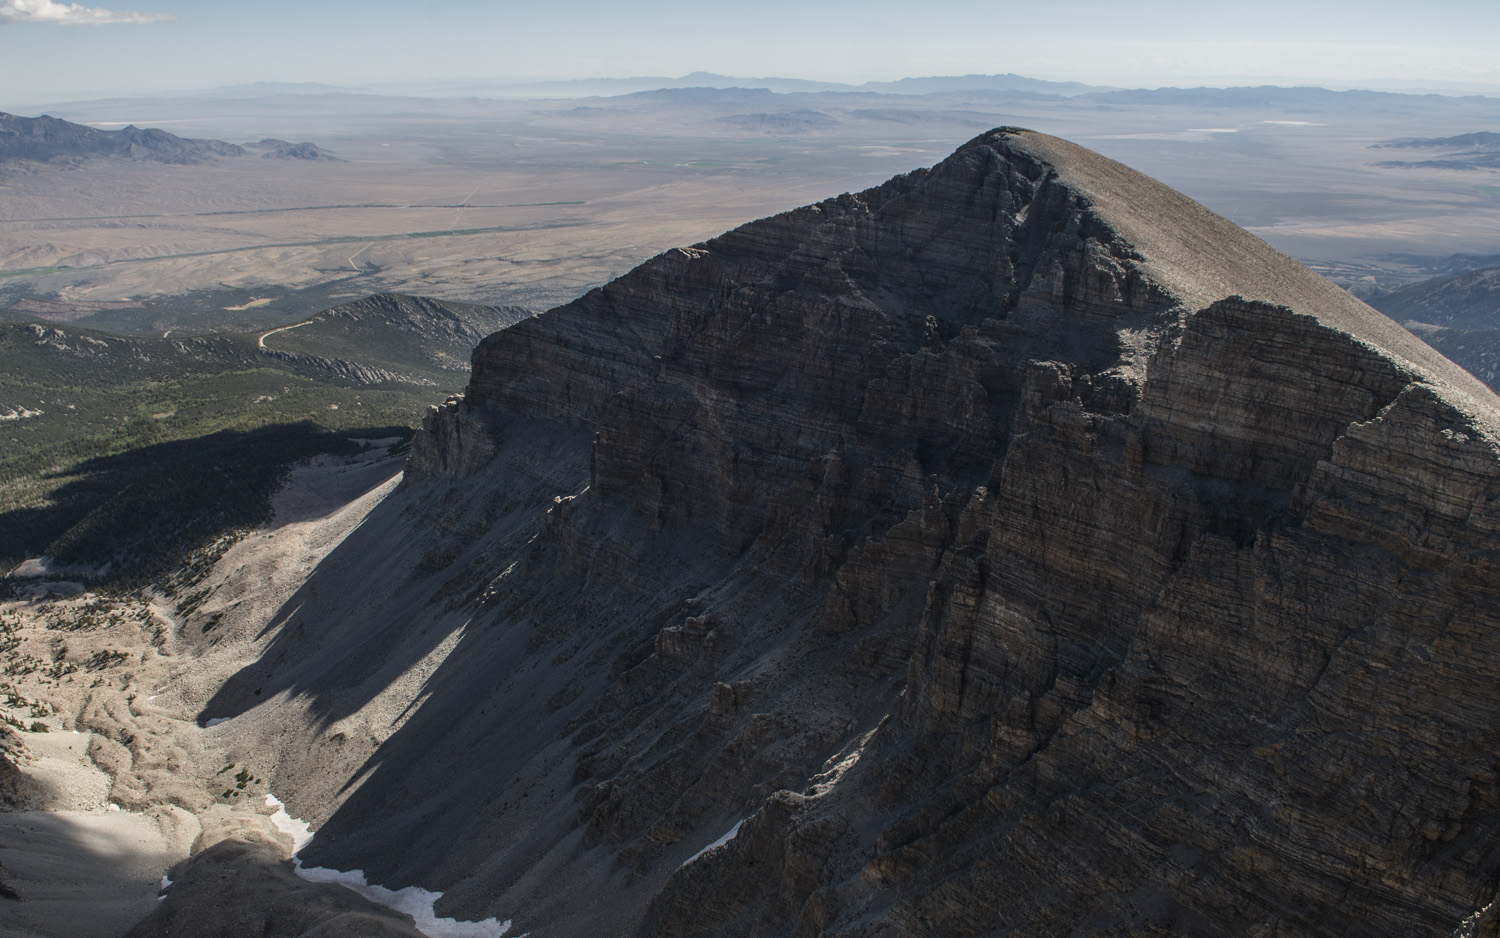 View of Jeff Davis Peak from the summit